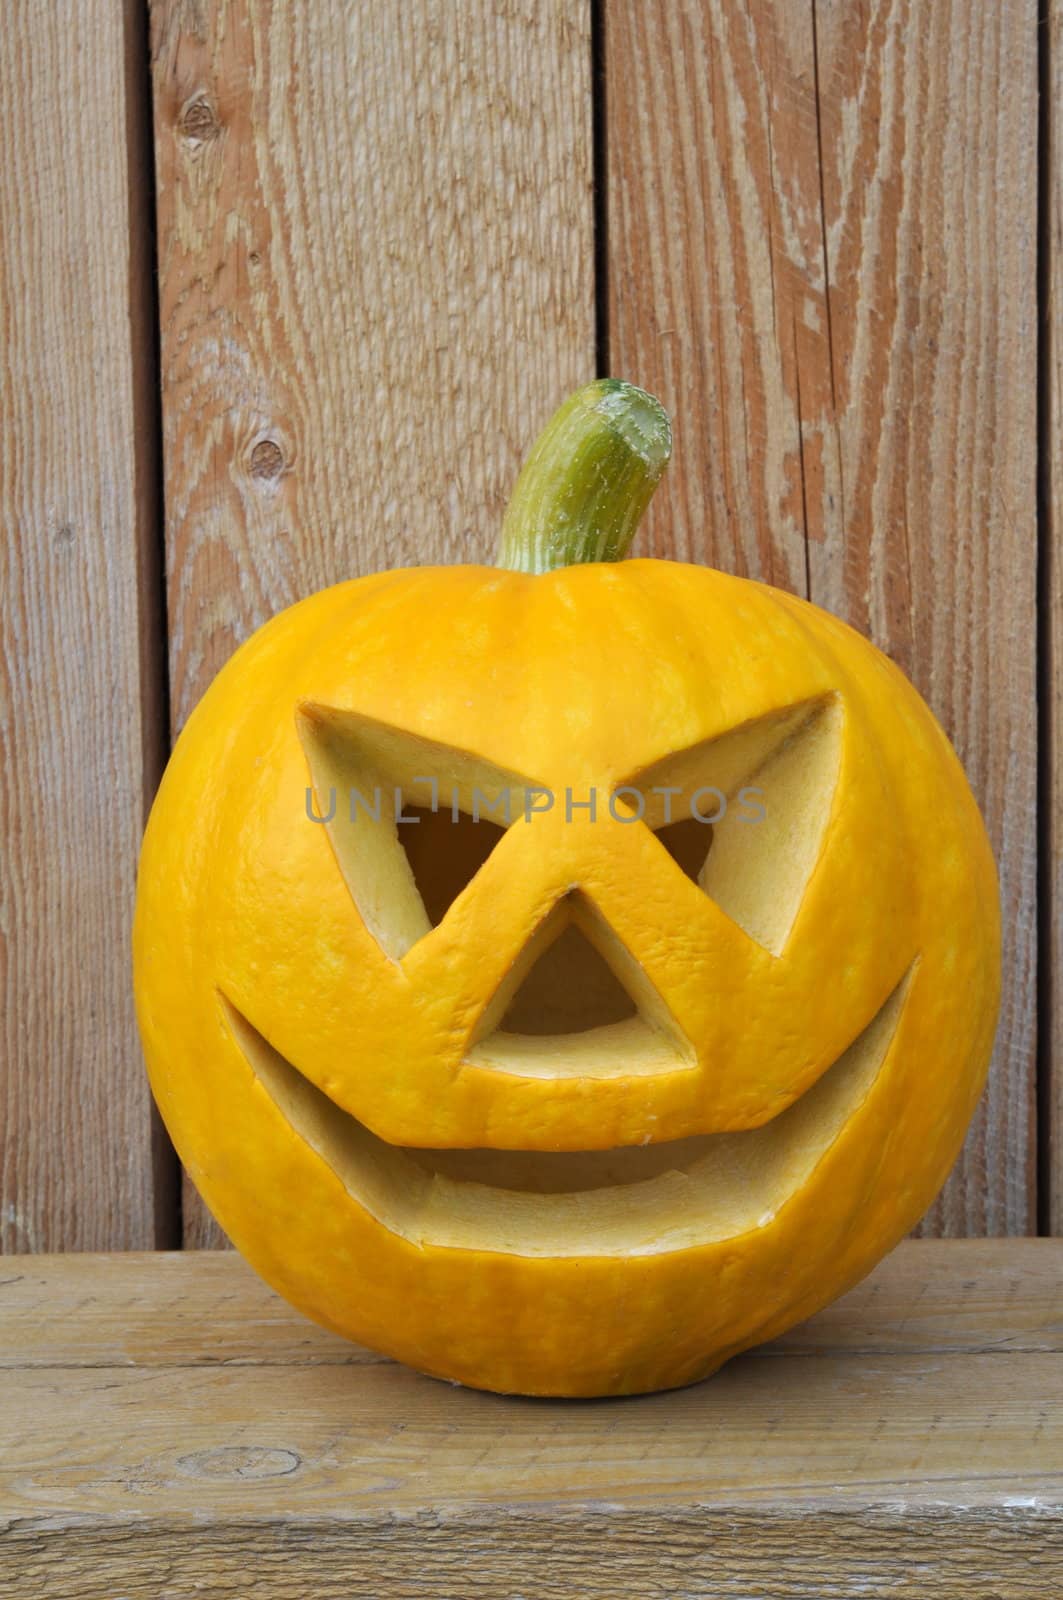 Symbol Halloween - a pumpkin � Lantern on a wooden bench against wooden boards..